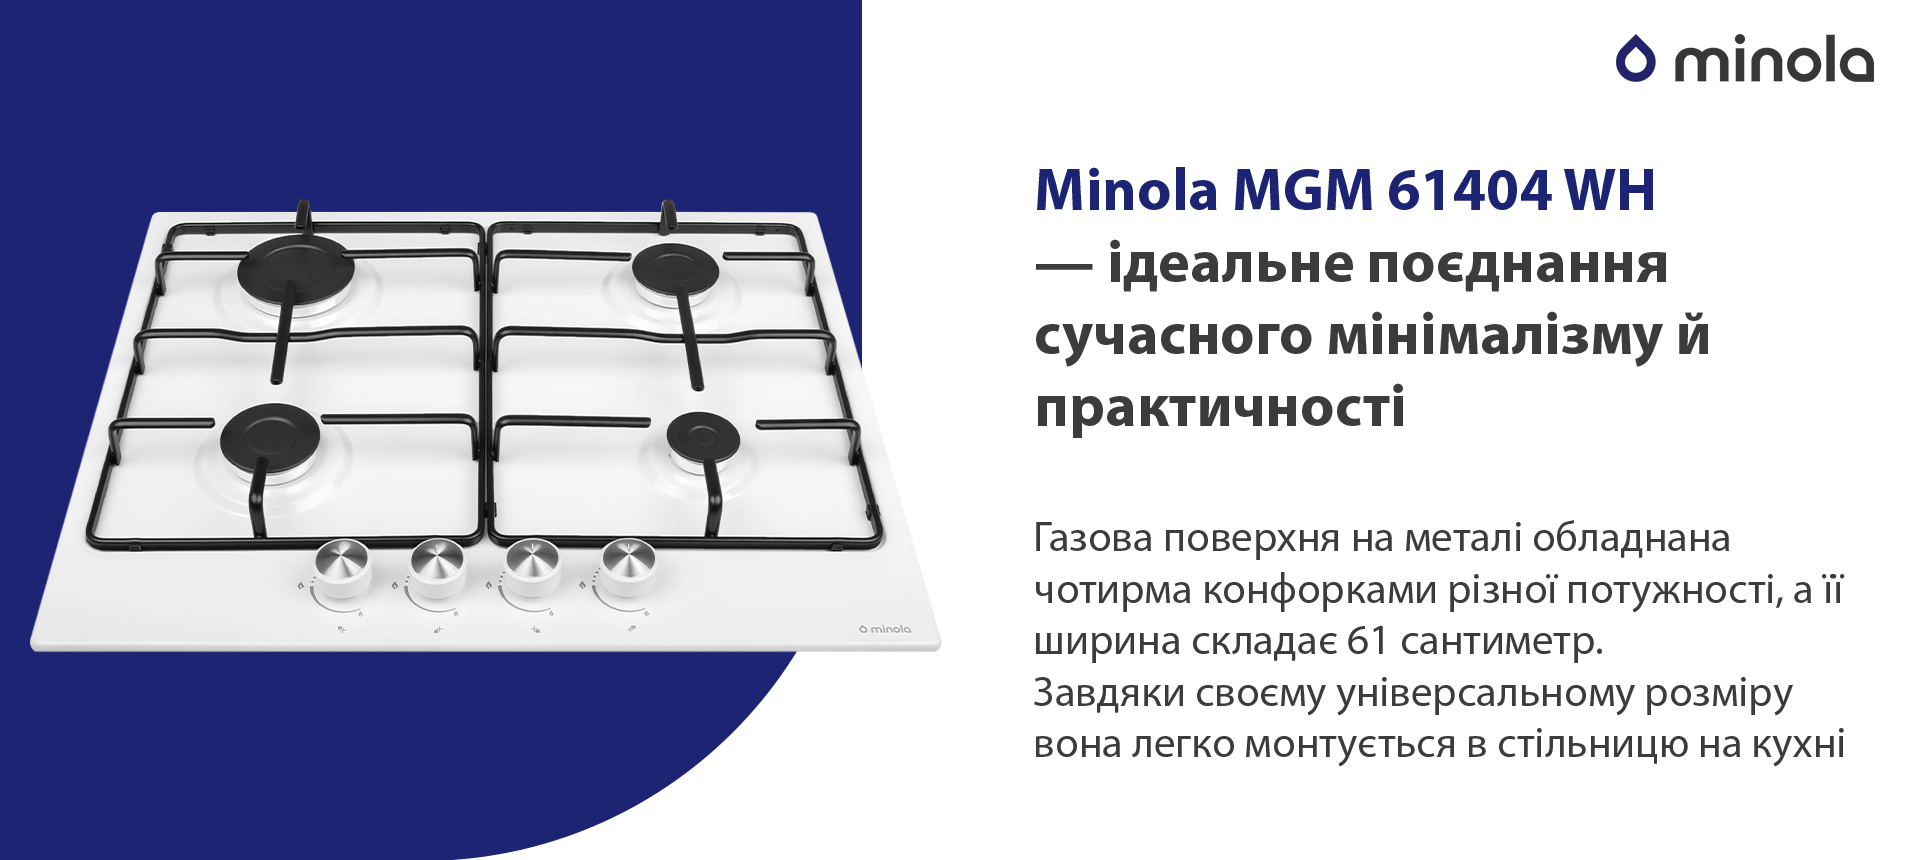 Minola MGM 61404 WH в магазине в Киеве - фото 10